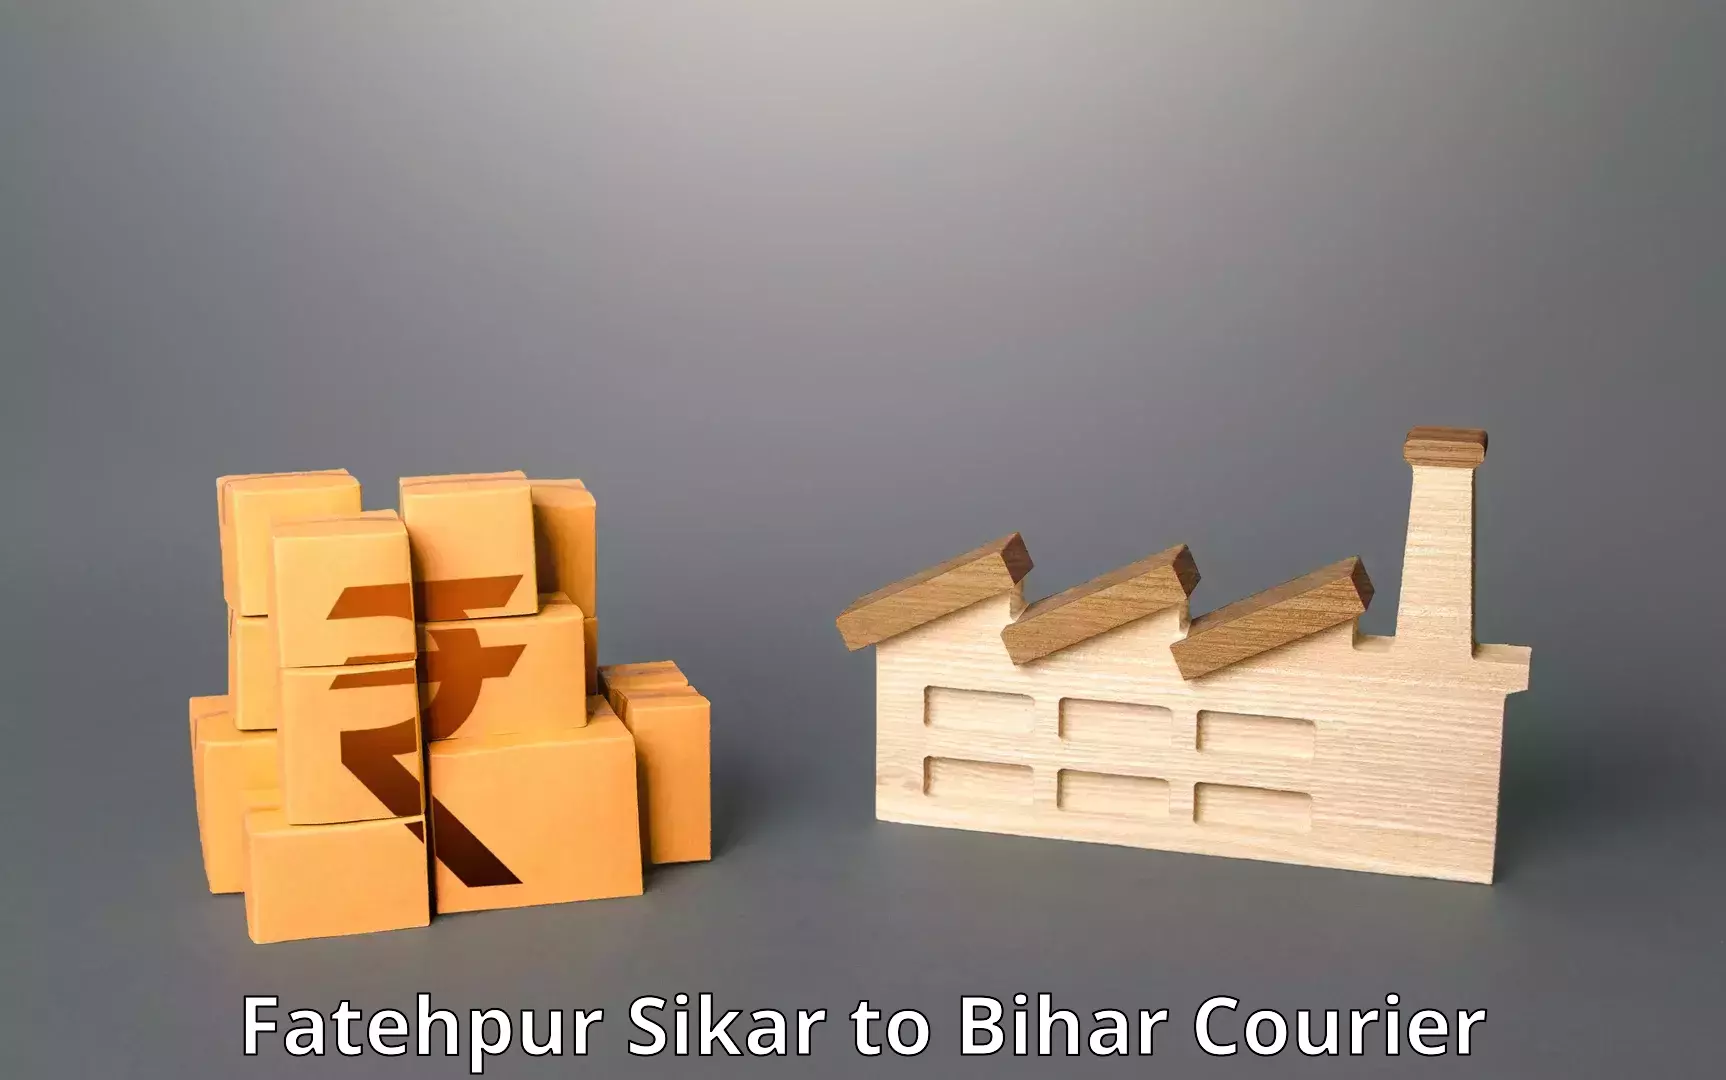 Courier service comparison Fatehpur Sikar to Jaynagar